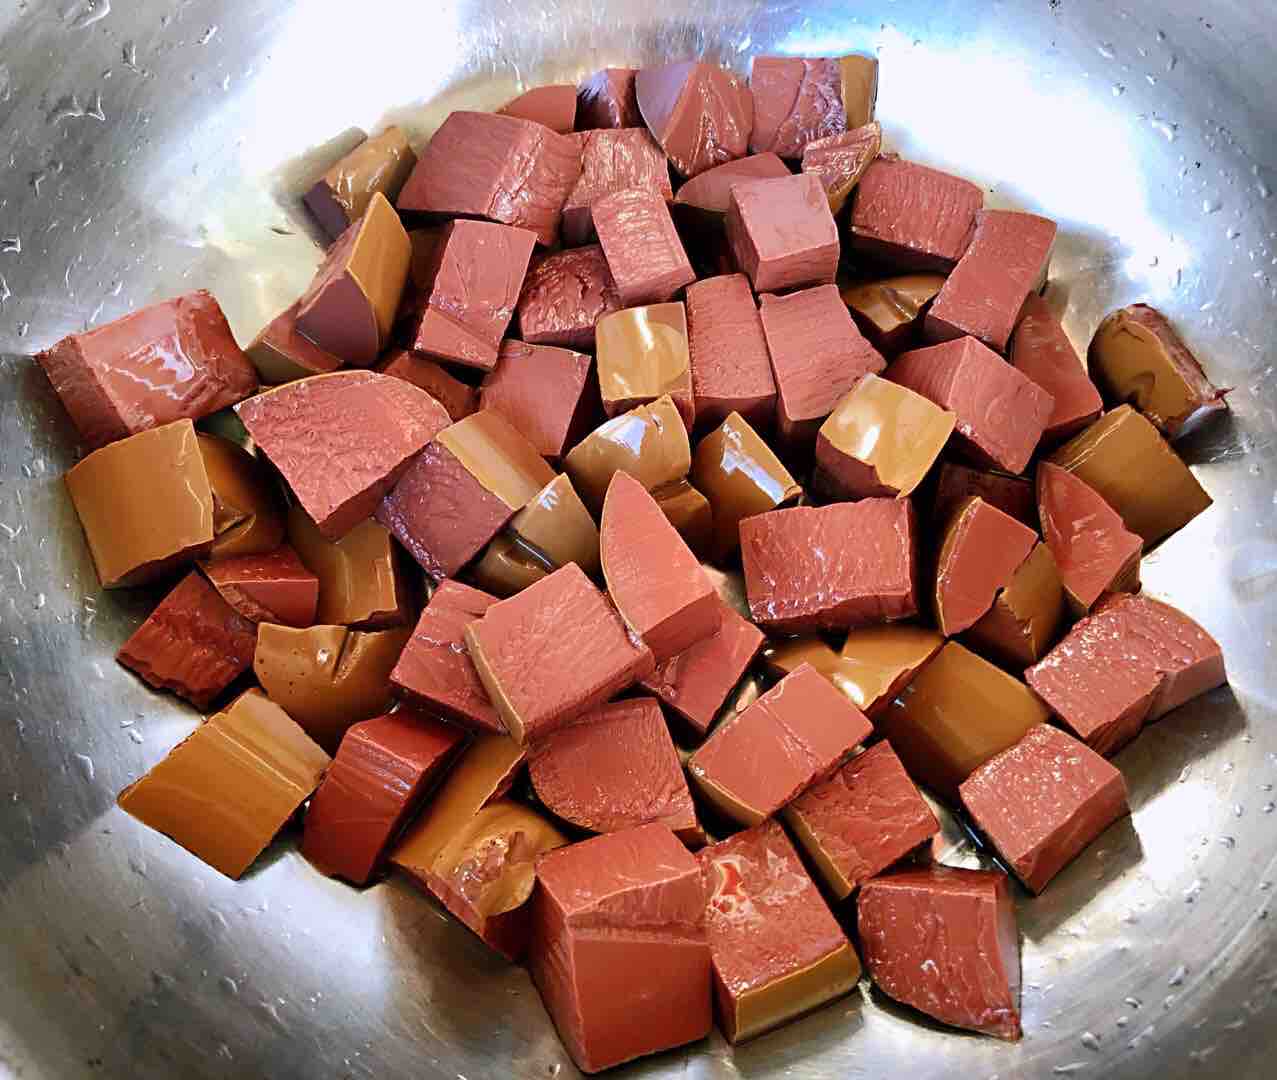 Pork Blood Stewed Tofu recipe